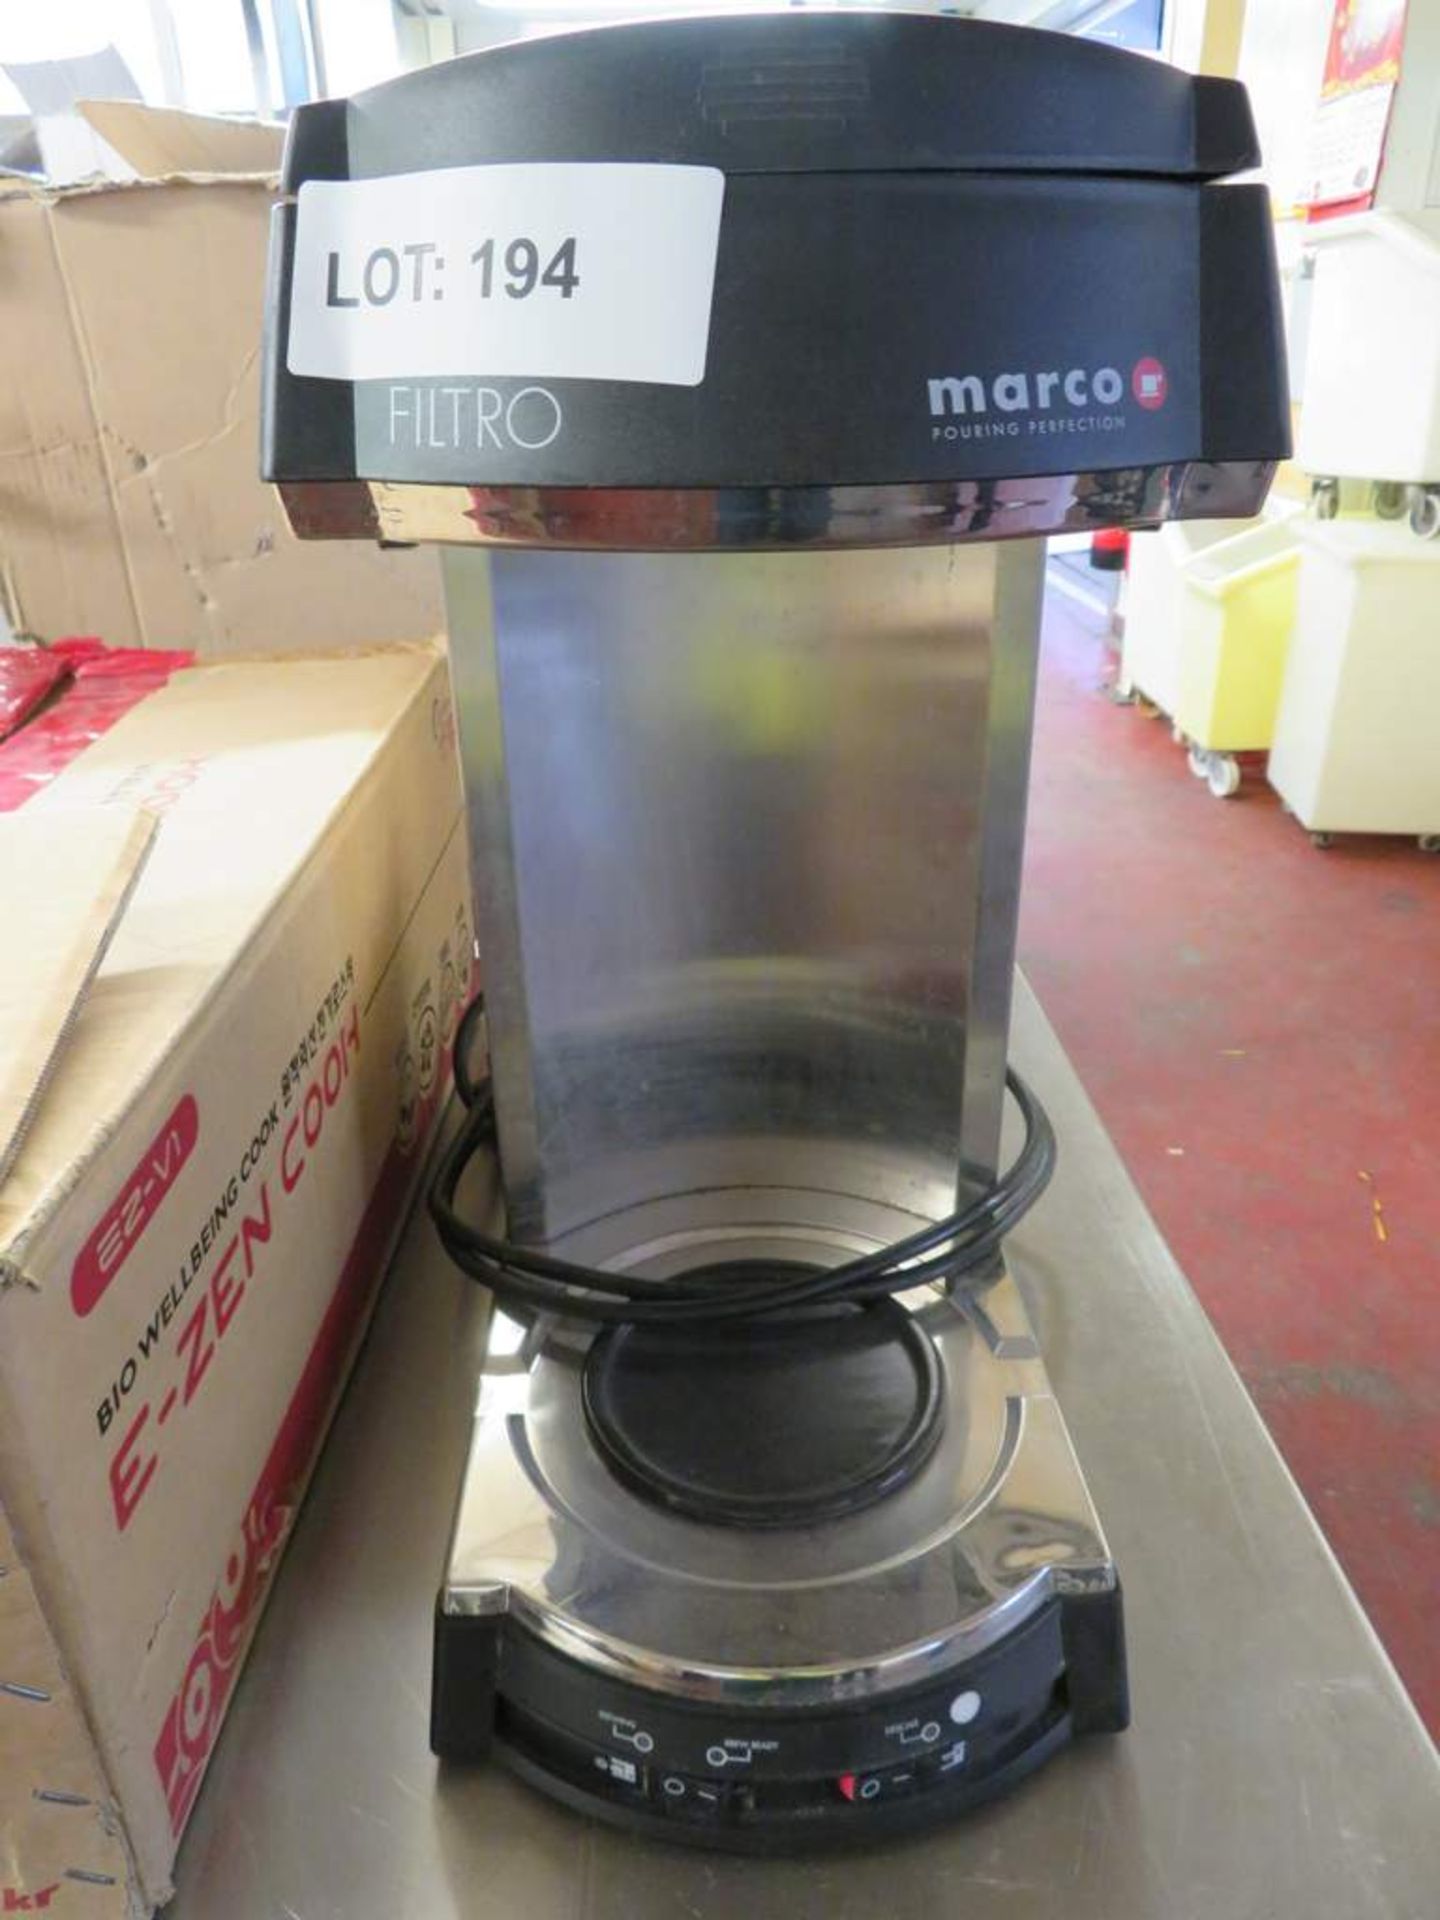 Marco filtro coffee maker. Model: Filtro MF/Jug - Image 2 of 2